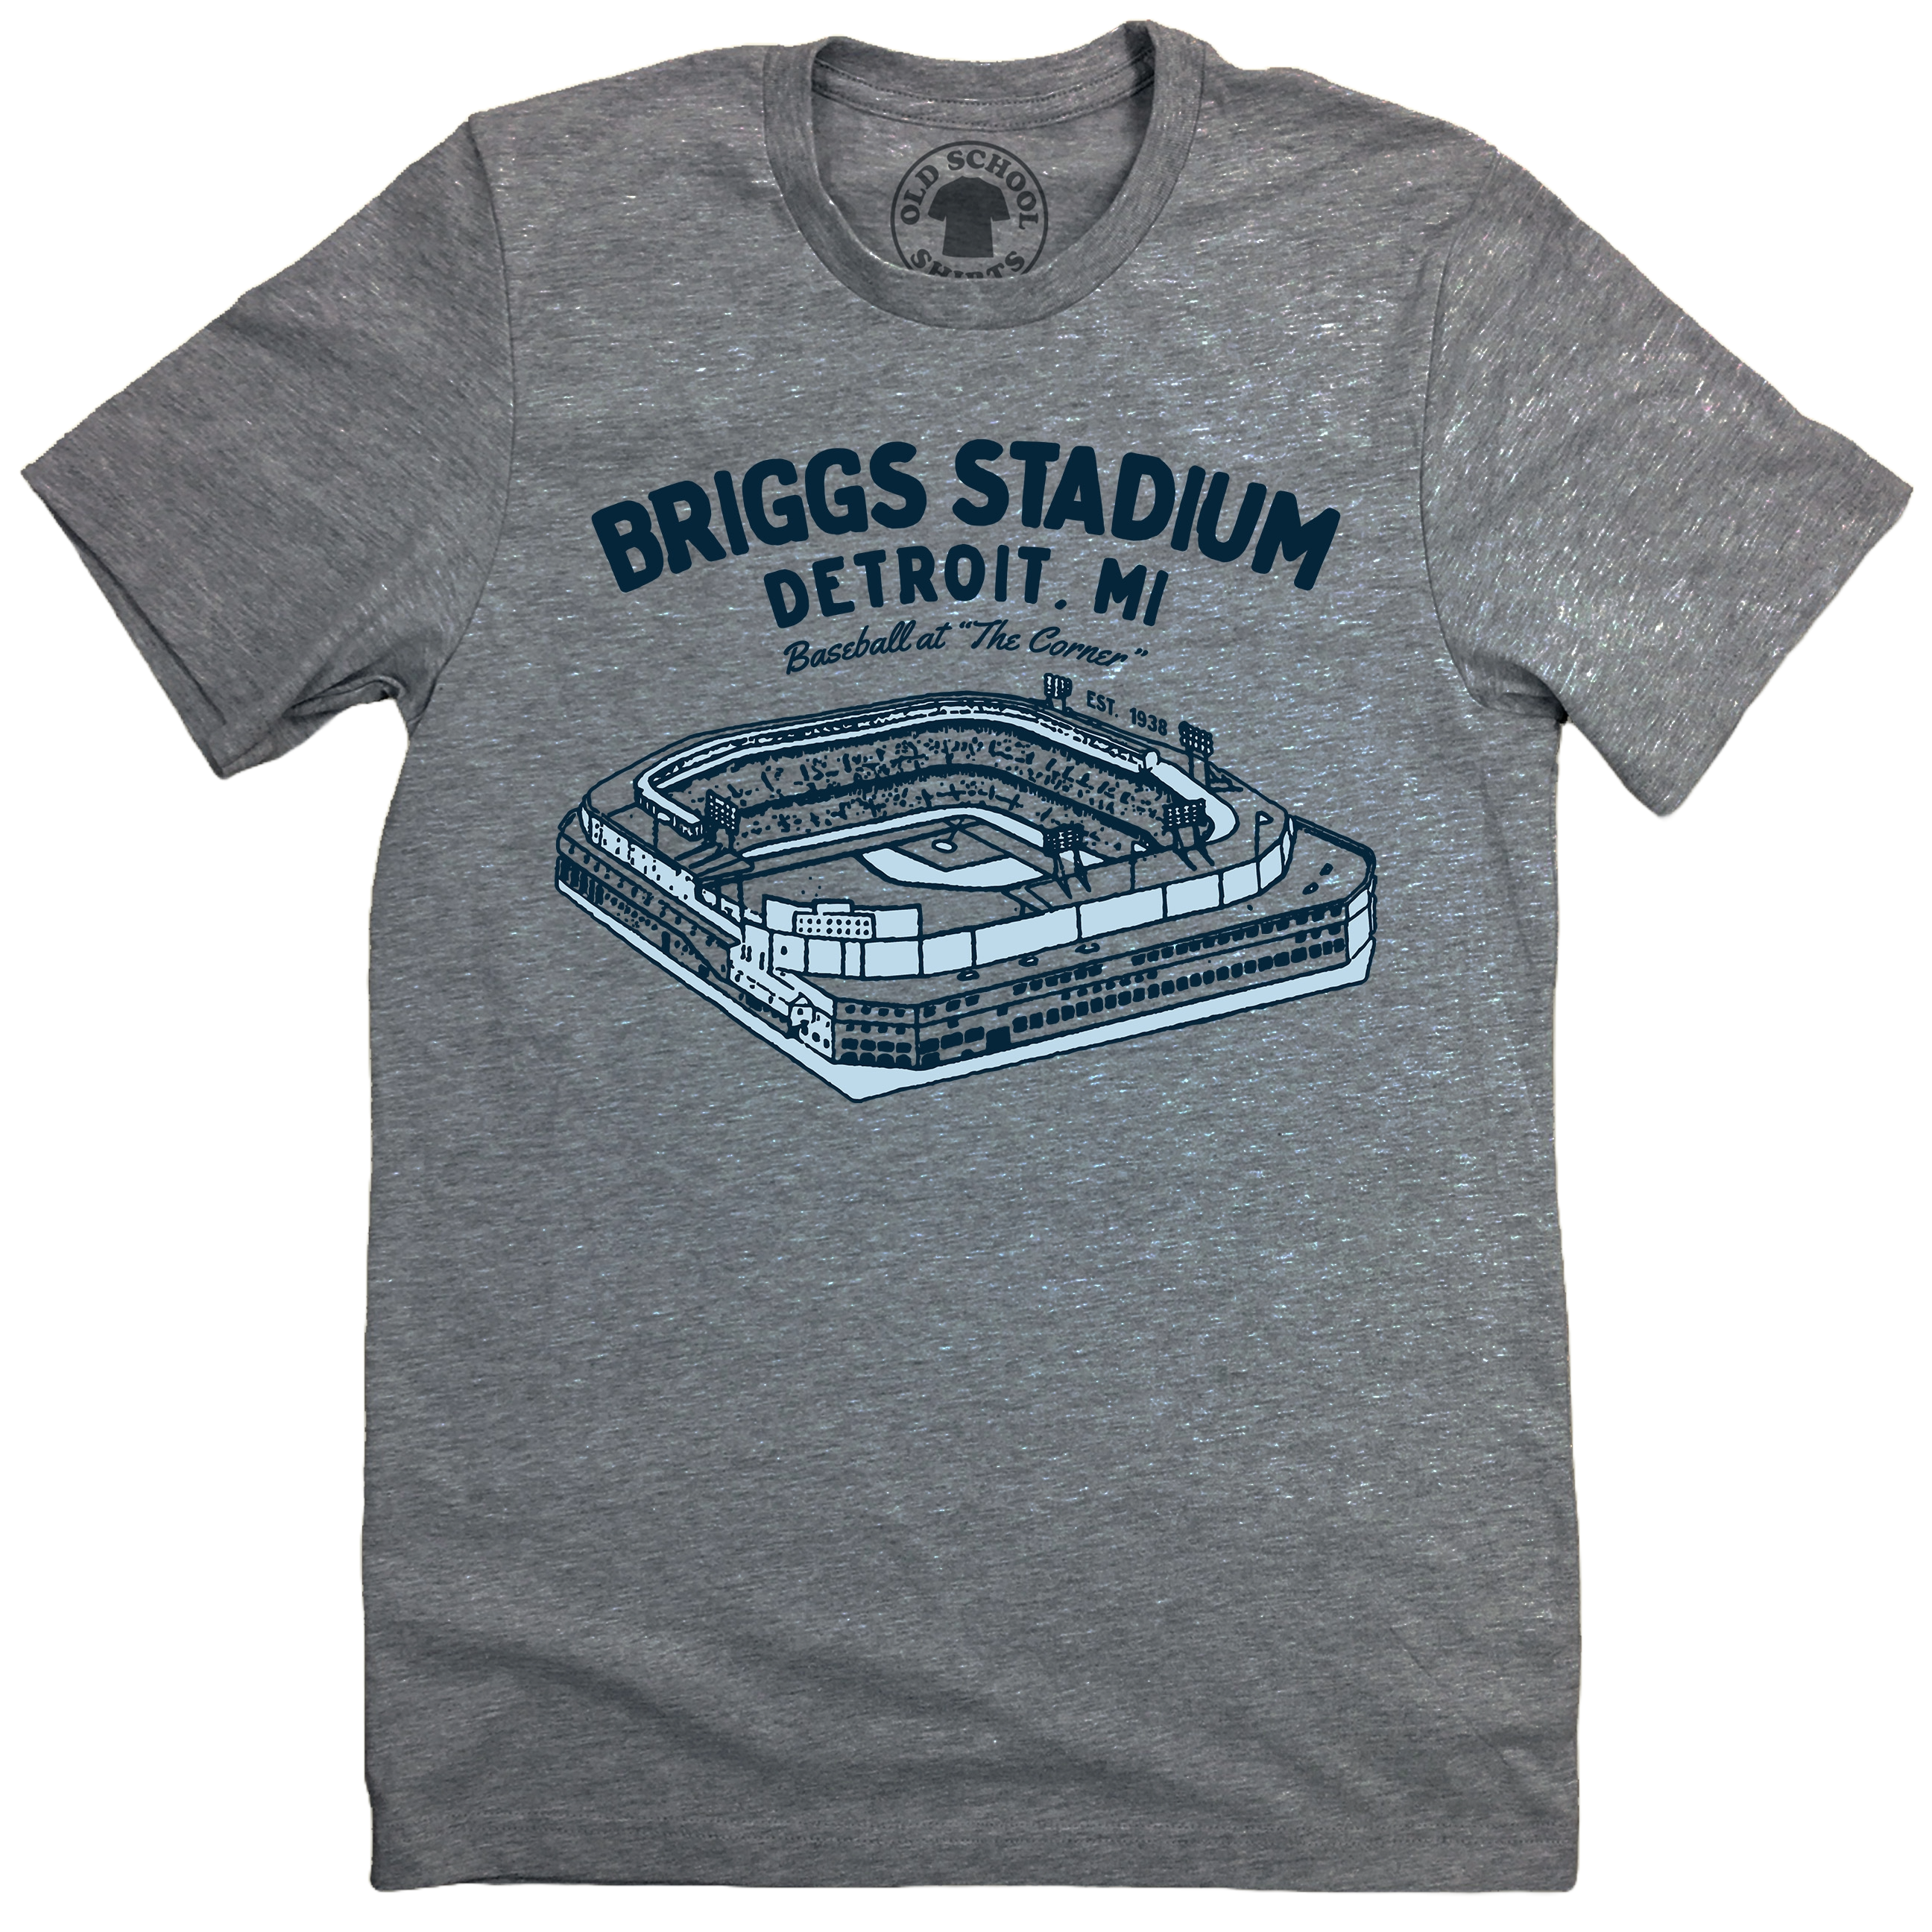 Briggs Stadium Tee, Vintage Detroit Apparel